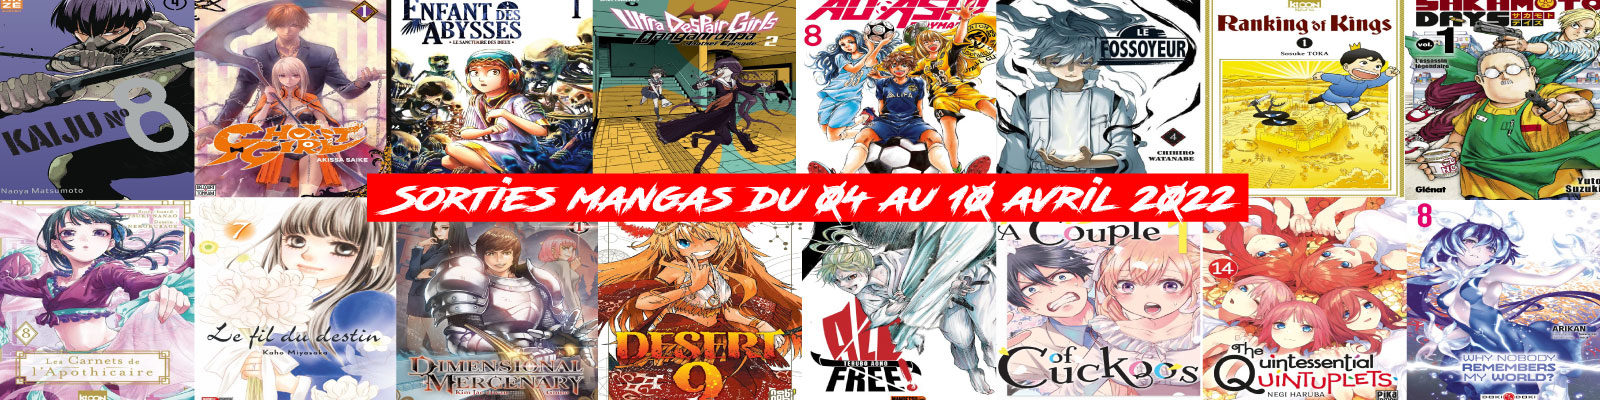 Sorties mangas-du-04-au-10-avril-2022-2